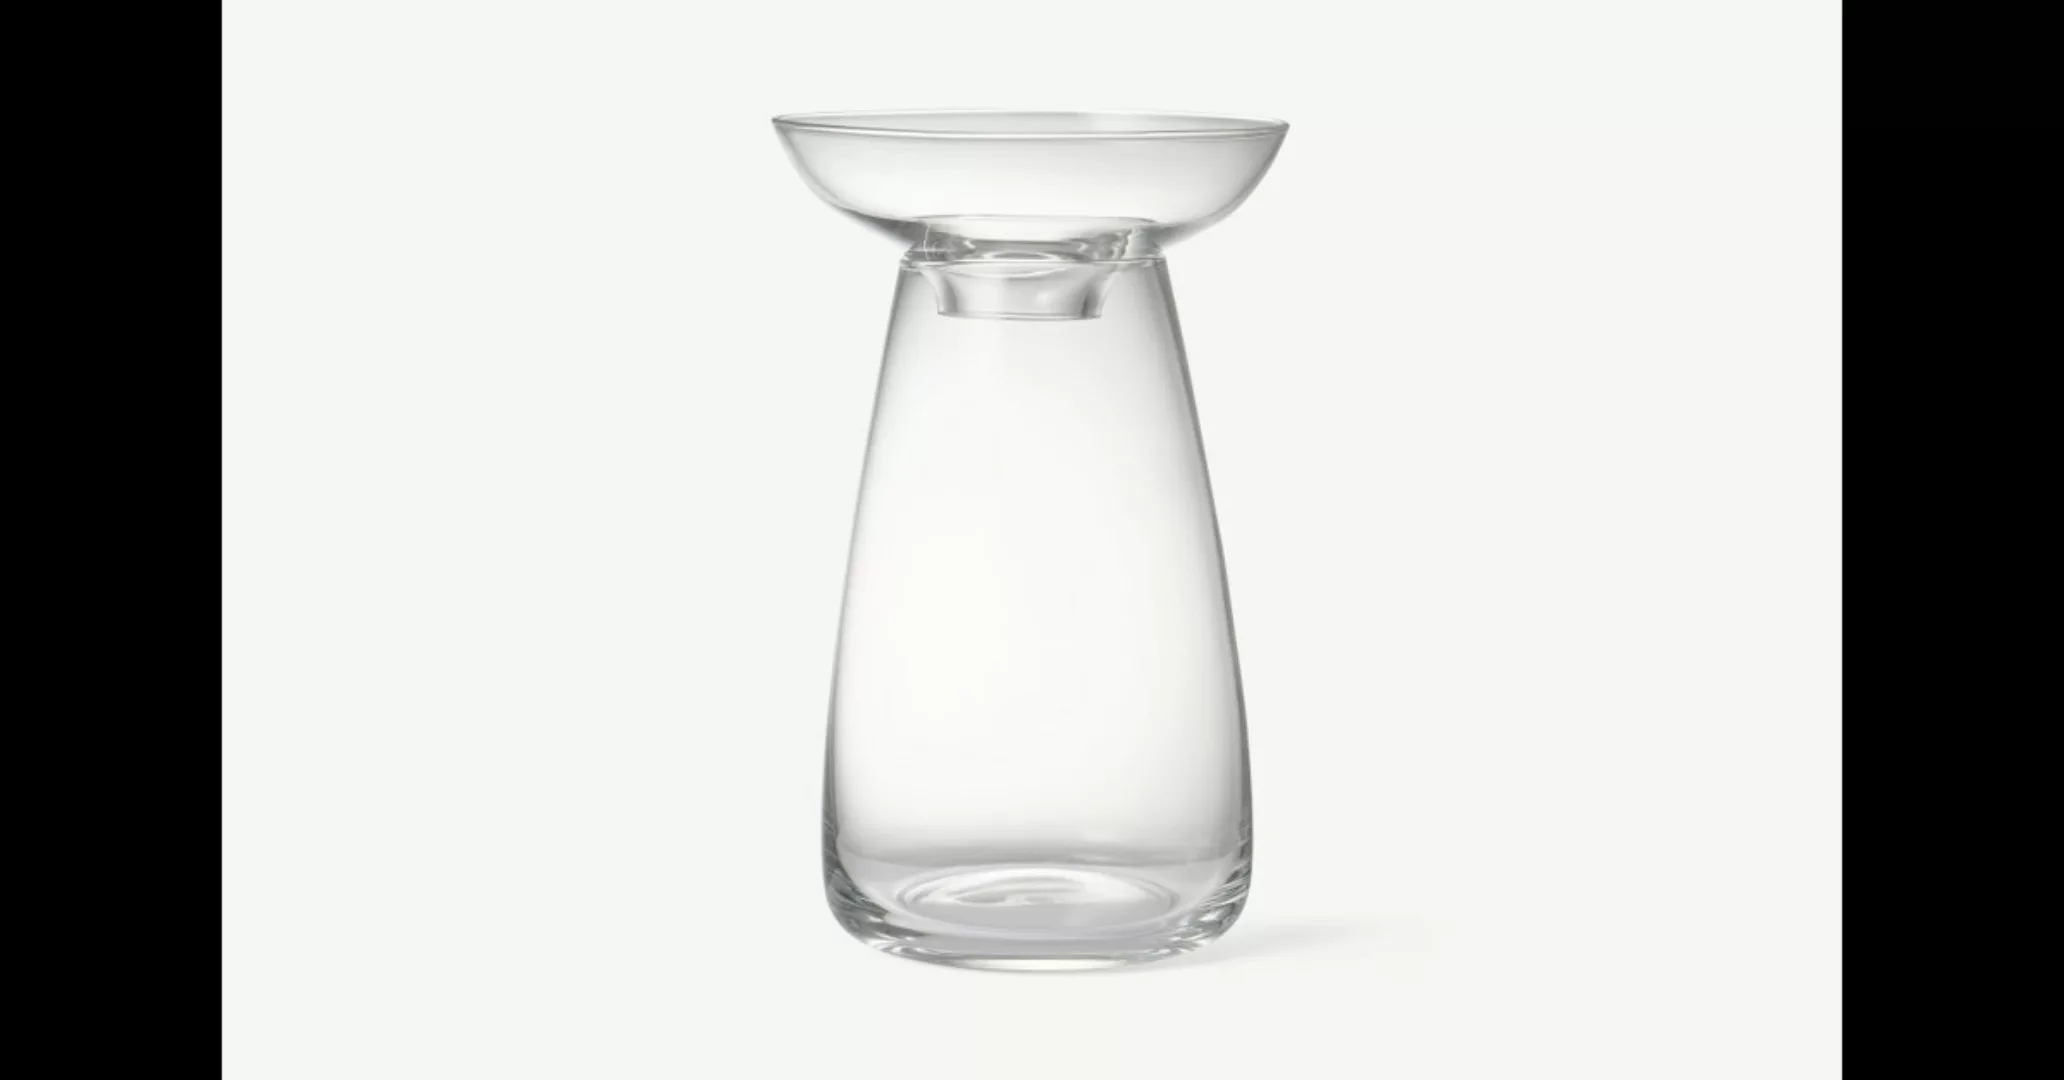 Kinto Aqua Culture grosse Vase, Klar - MADE.com günstig online kaufen